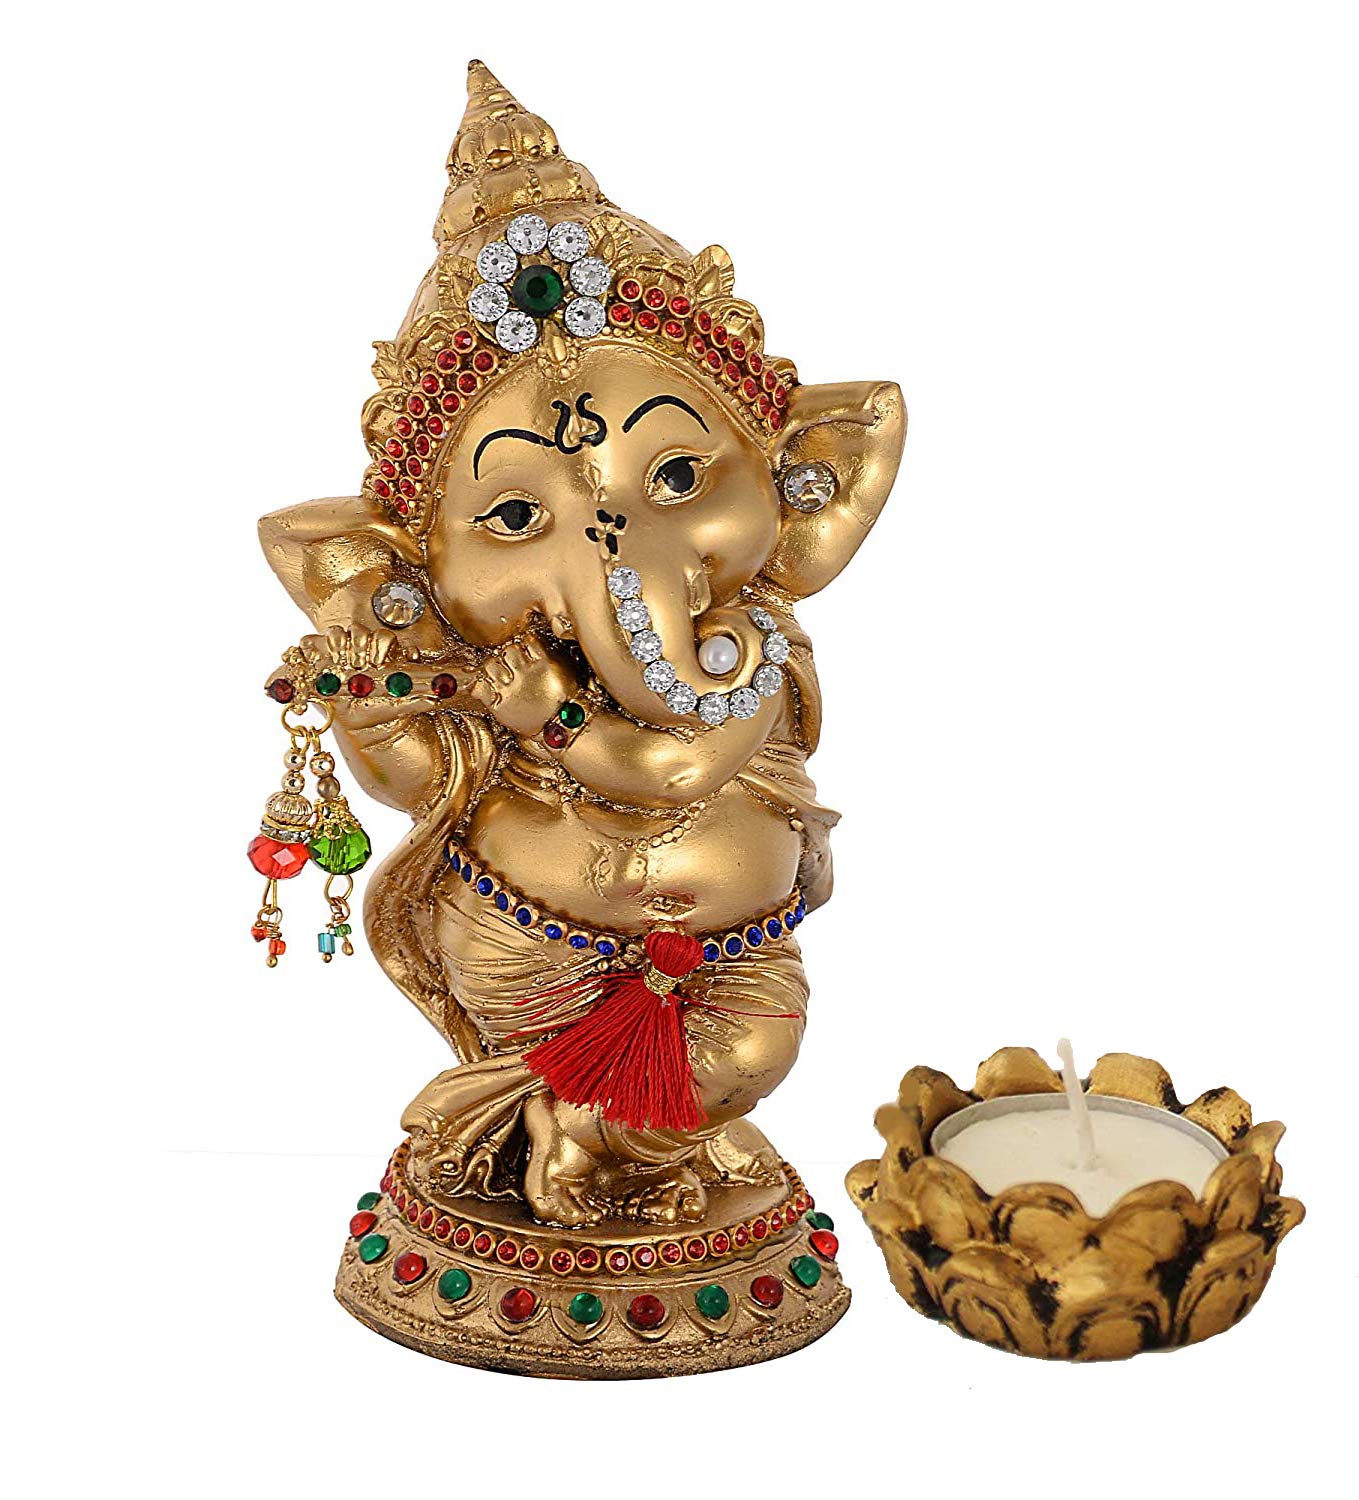 Cute Ganesha Idol Gift Sculpture Lord Ganesh Figurines Statue Home Car  Dashboard | eBay